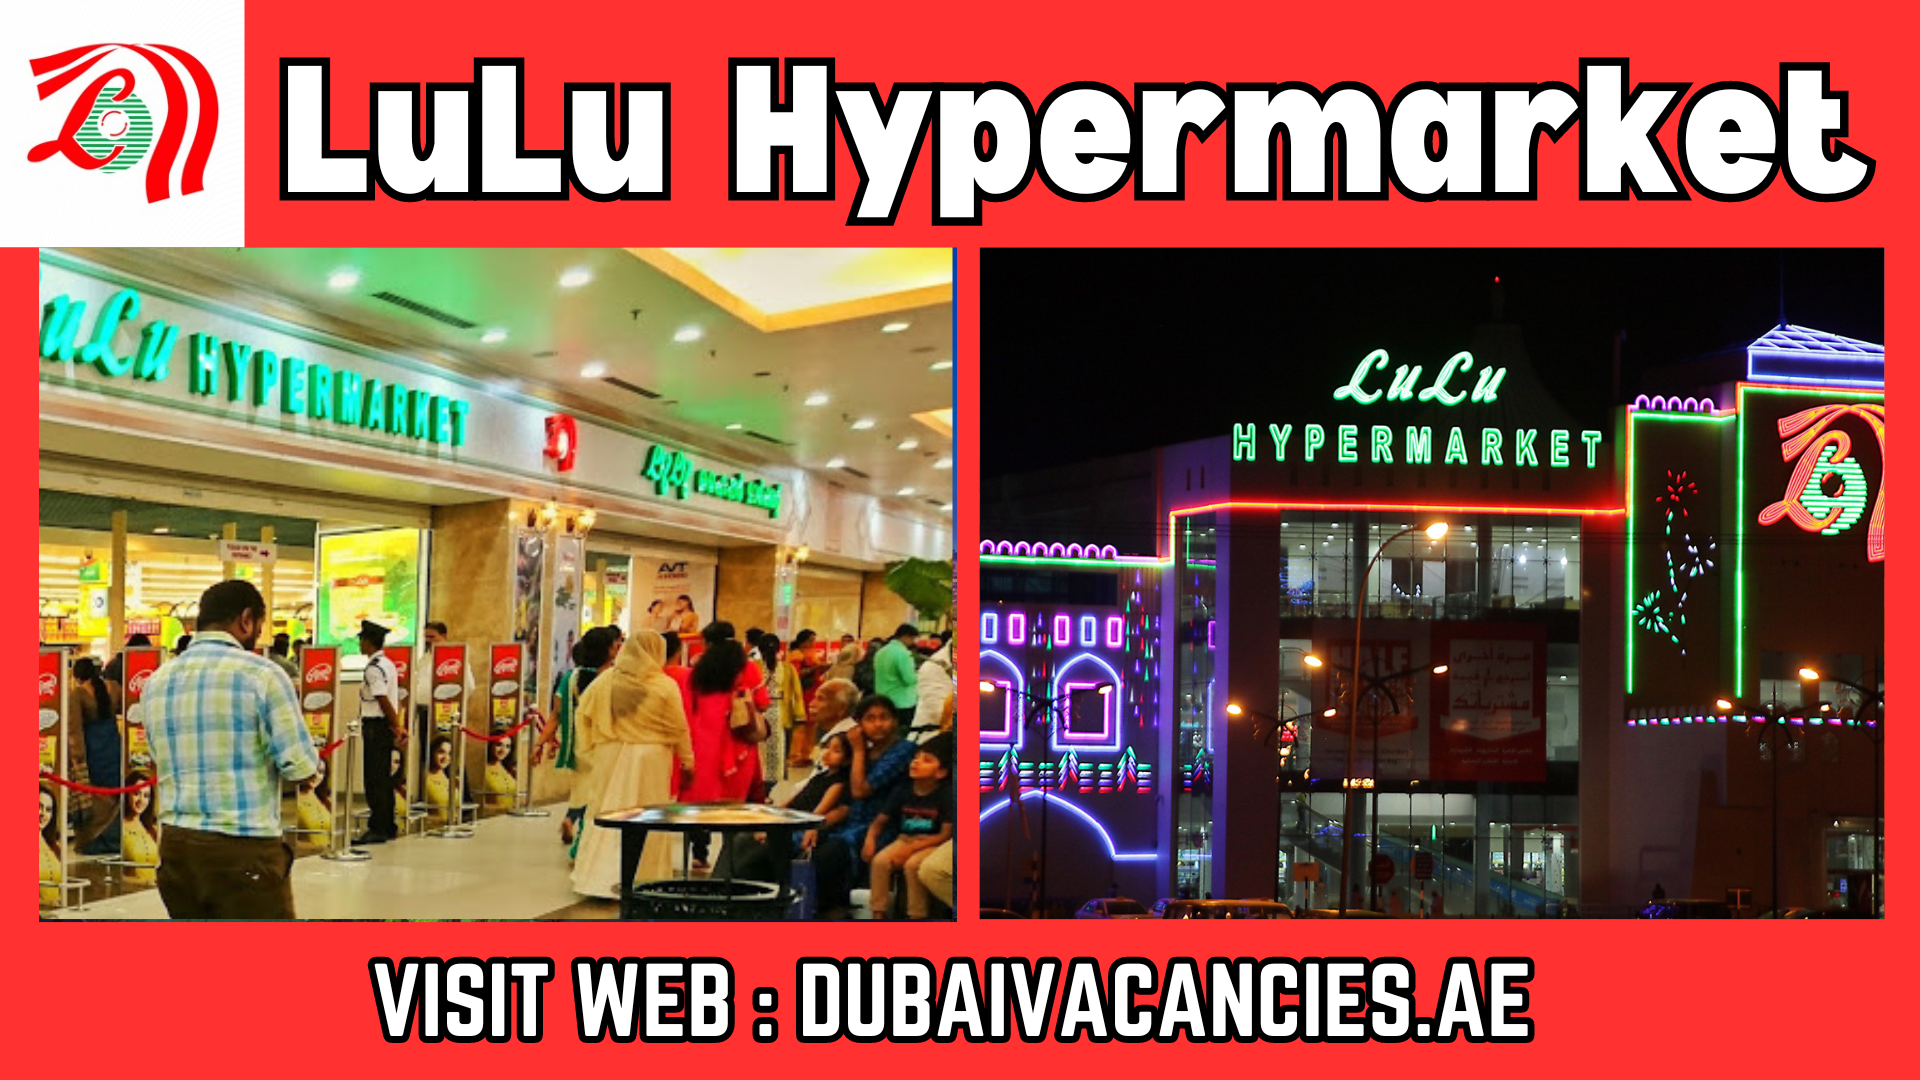 LuLu Hypermarket Jobs